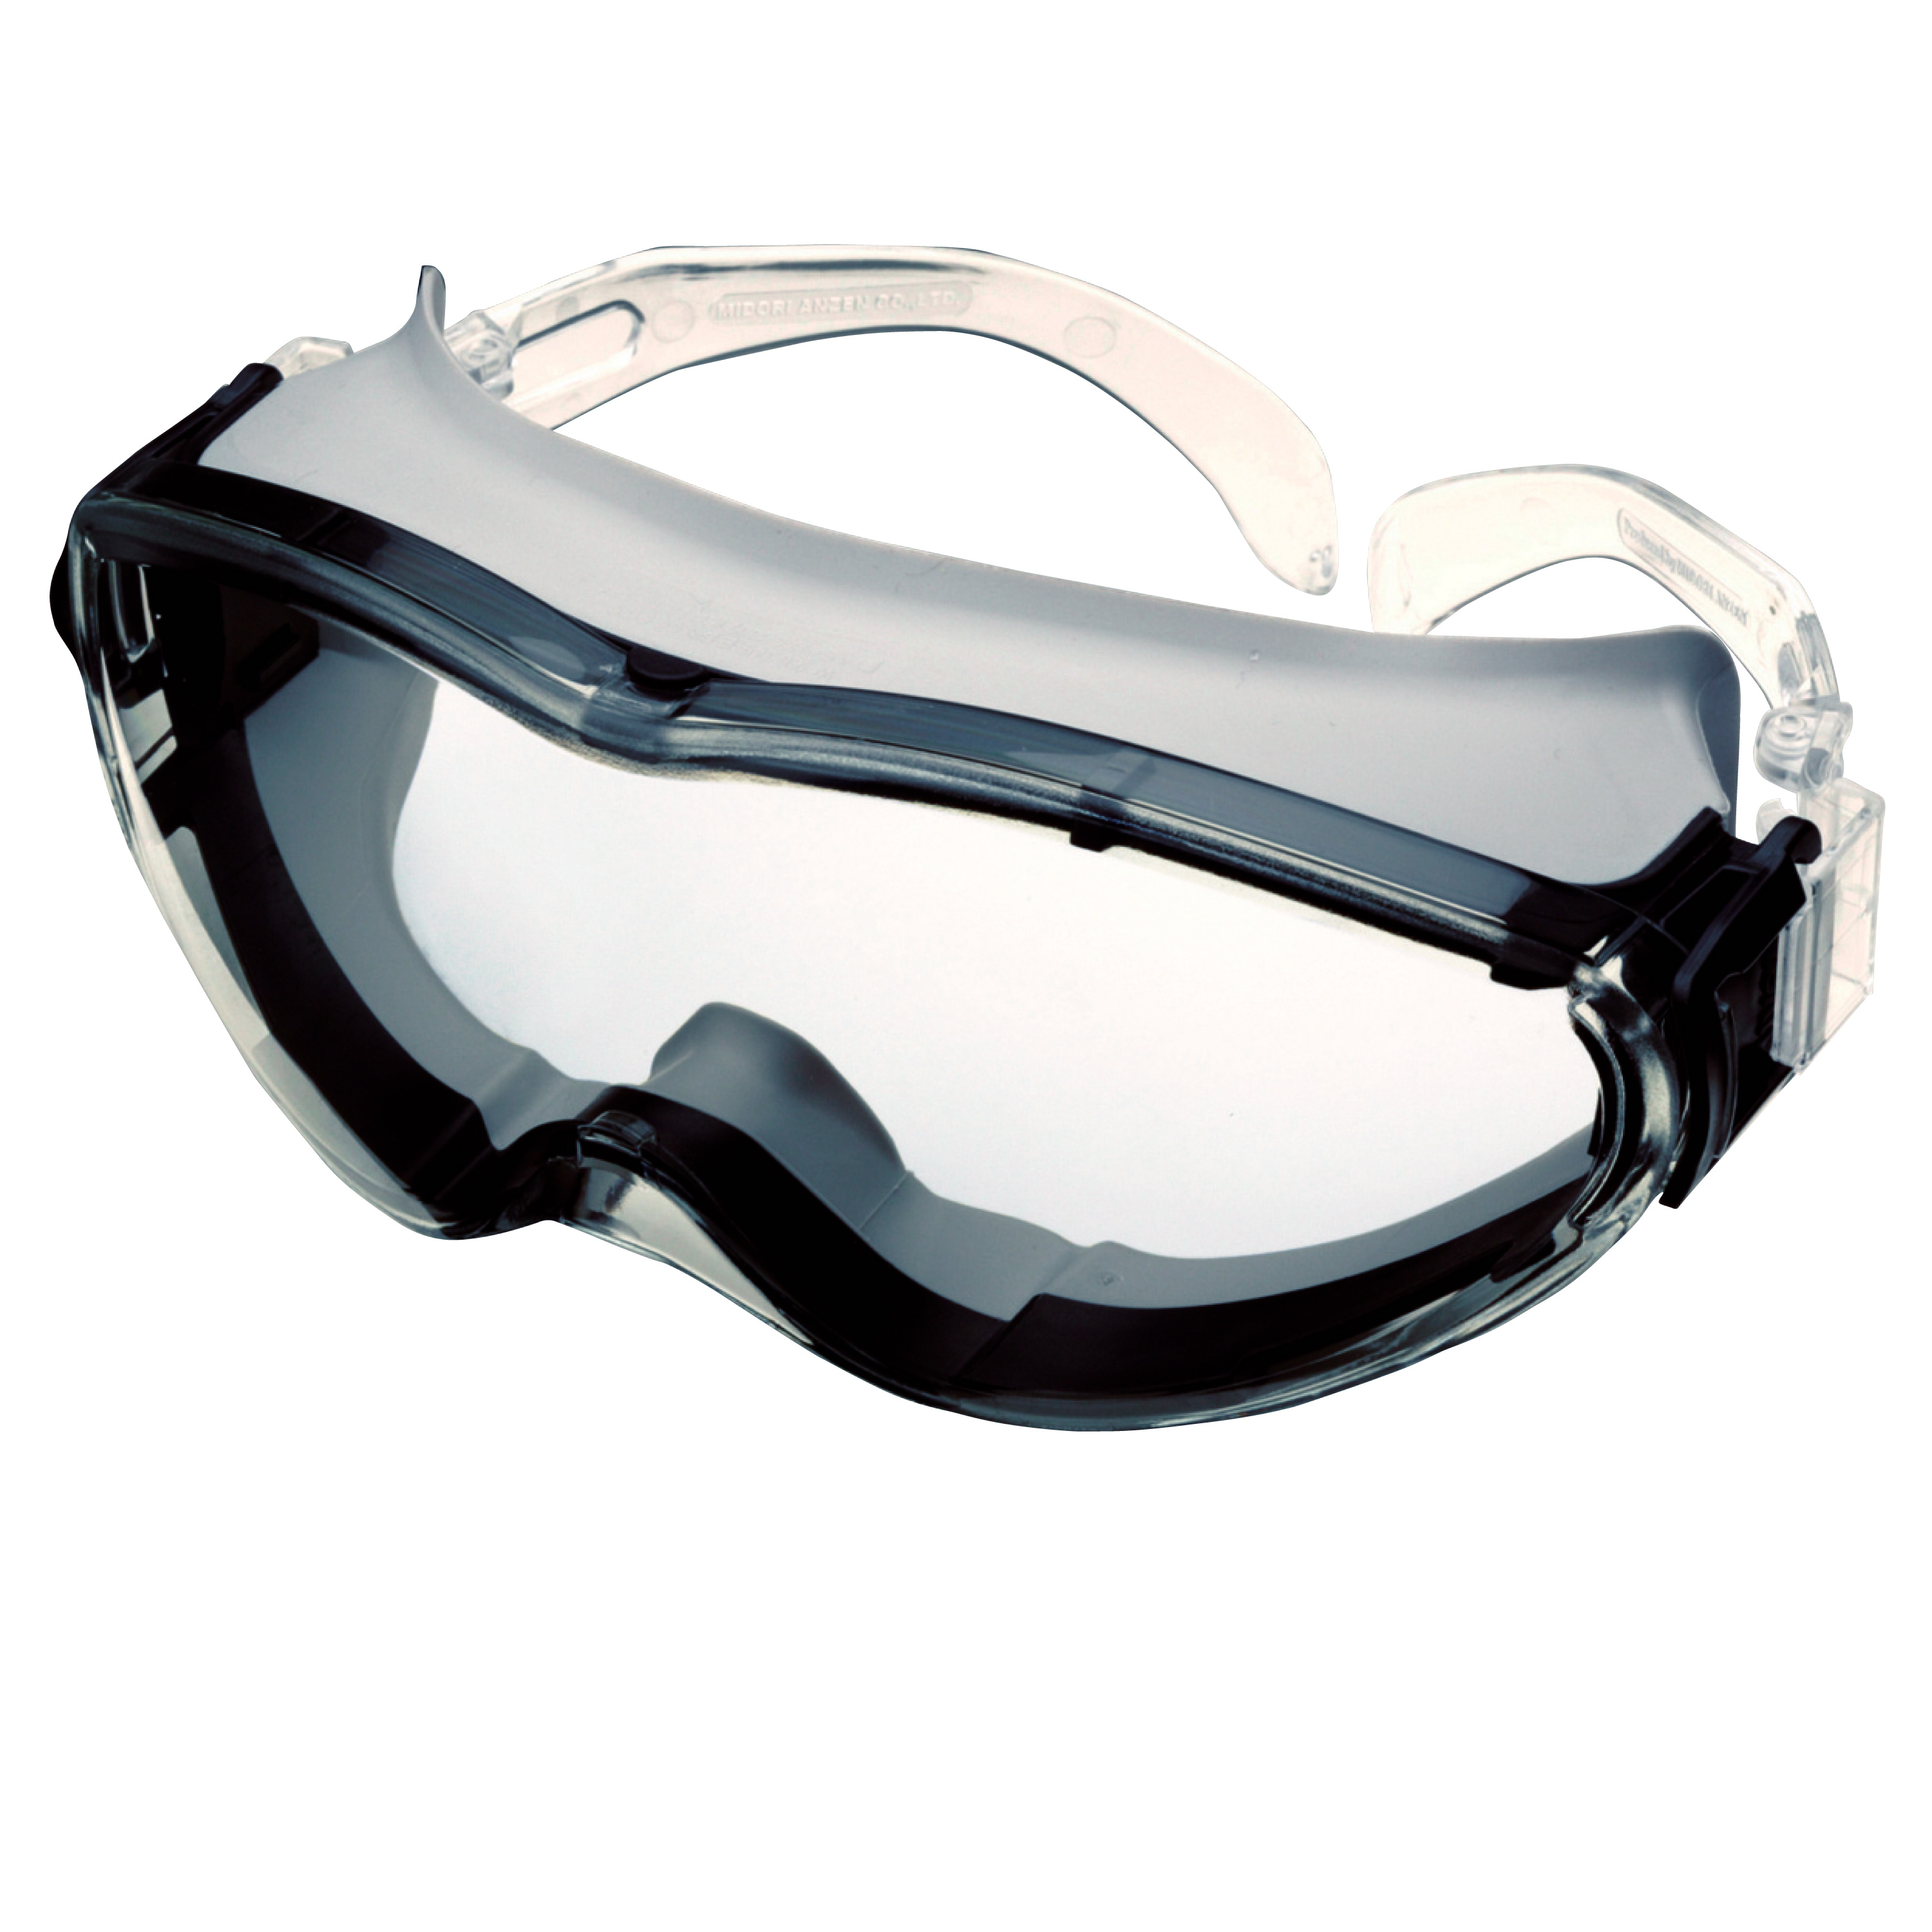 Goggles X-9302 สีเทา